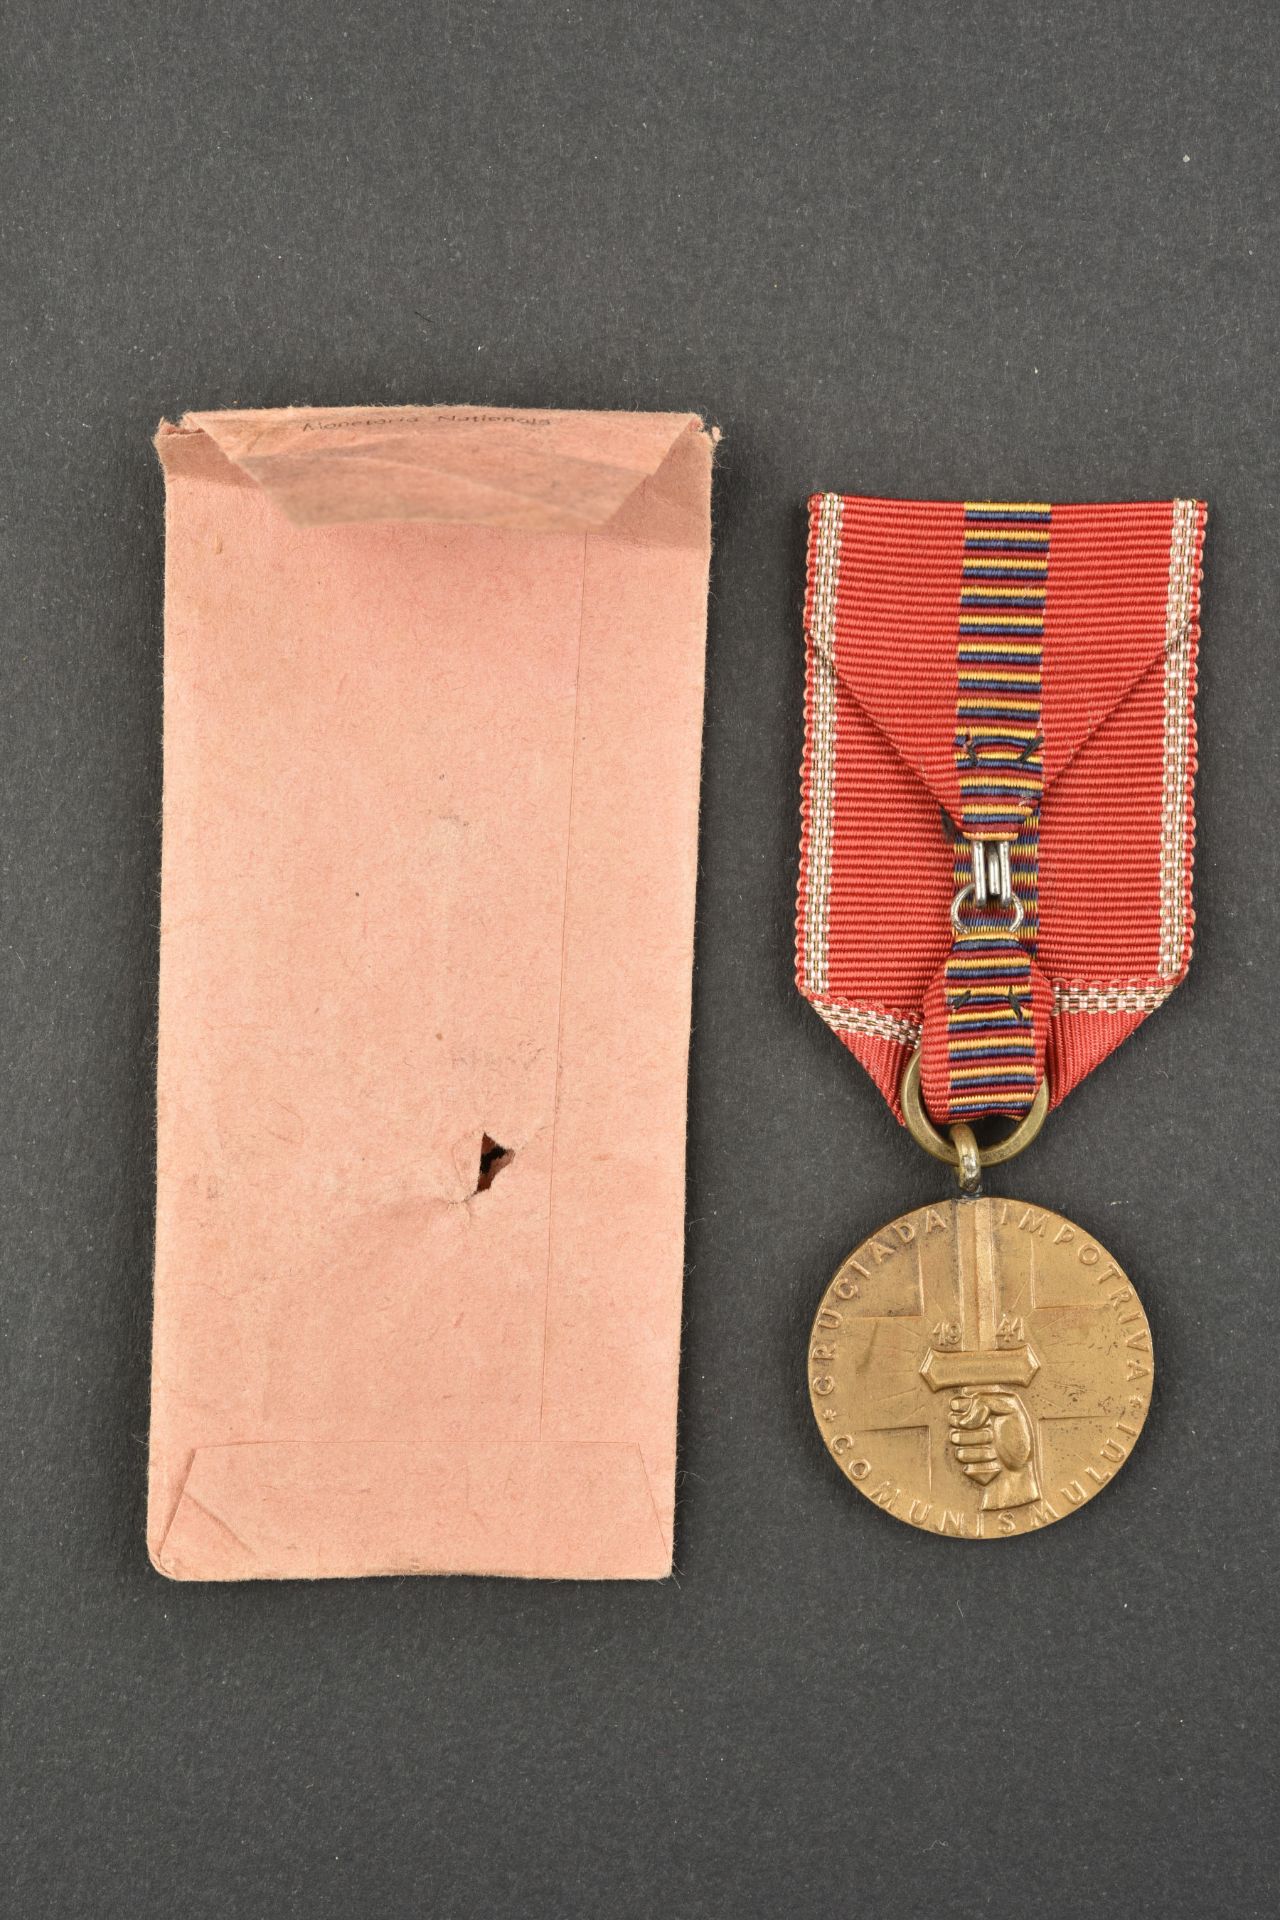 Medaille de la croisade contre le communisme. Medal for the crusade against communism. - Image 2 of 2